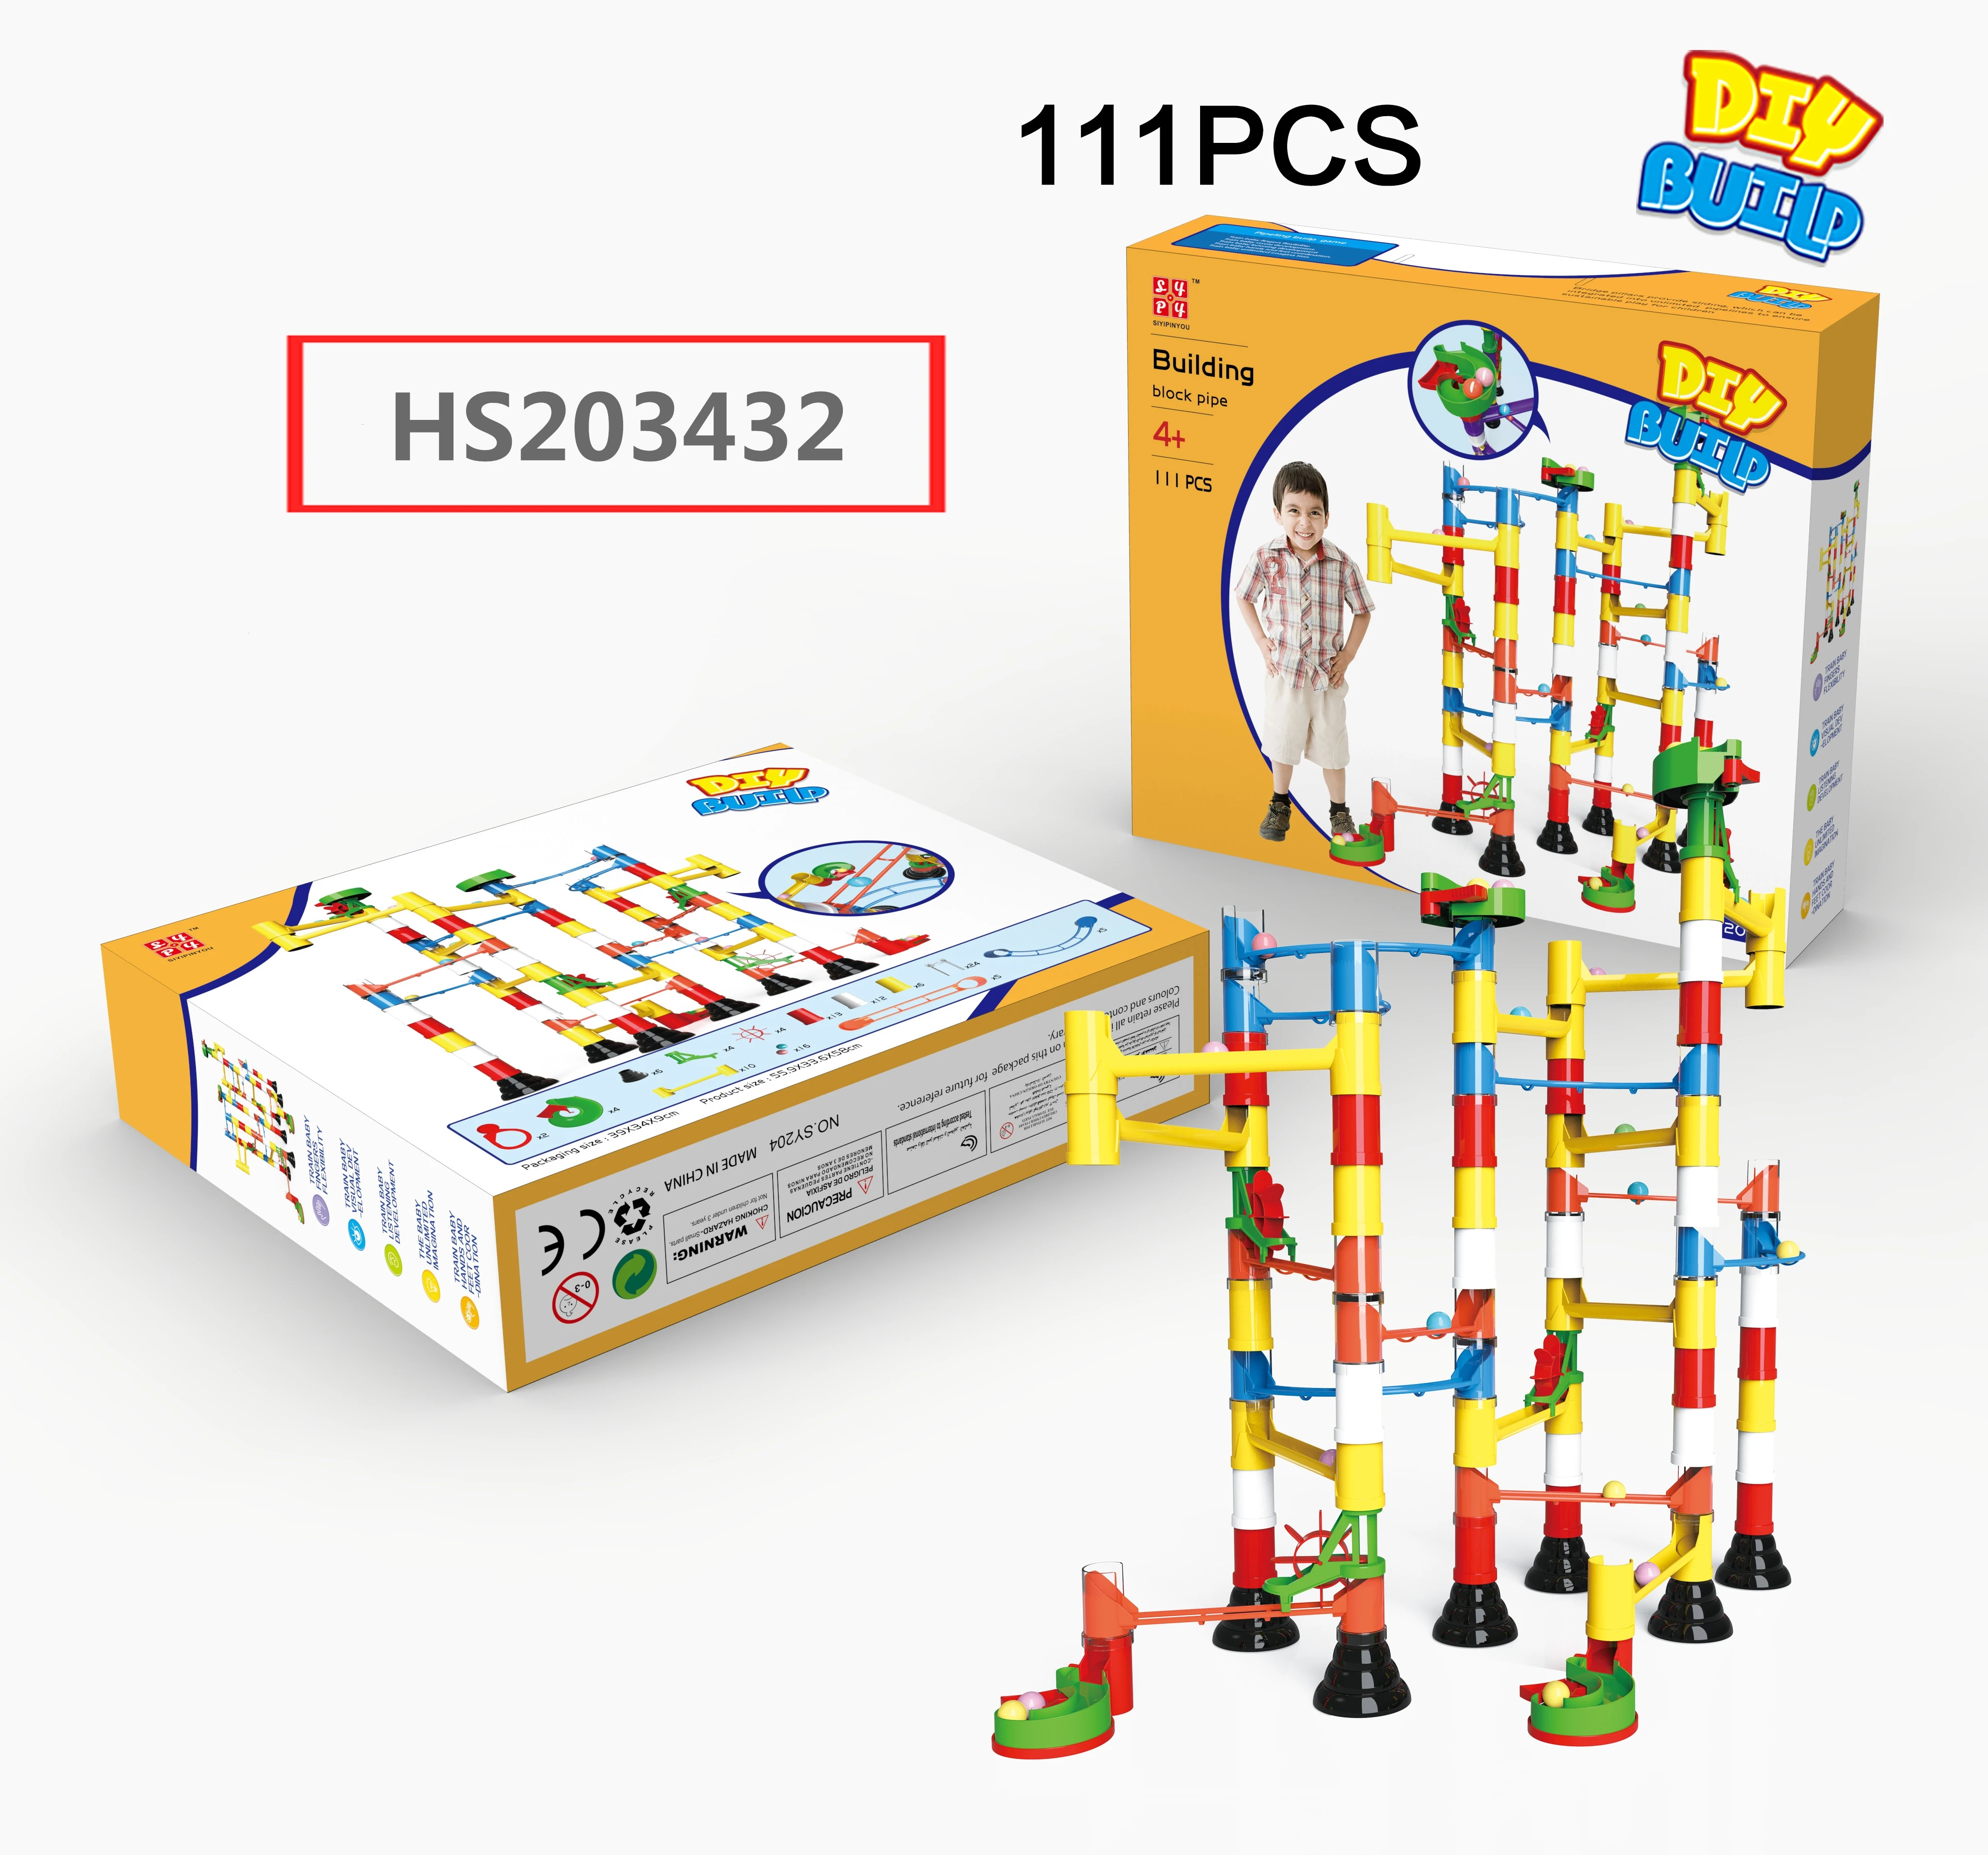 HS203432, Huwsin toys, Building block,111pcs, DIY toy for kids